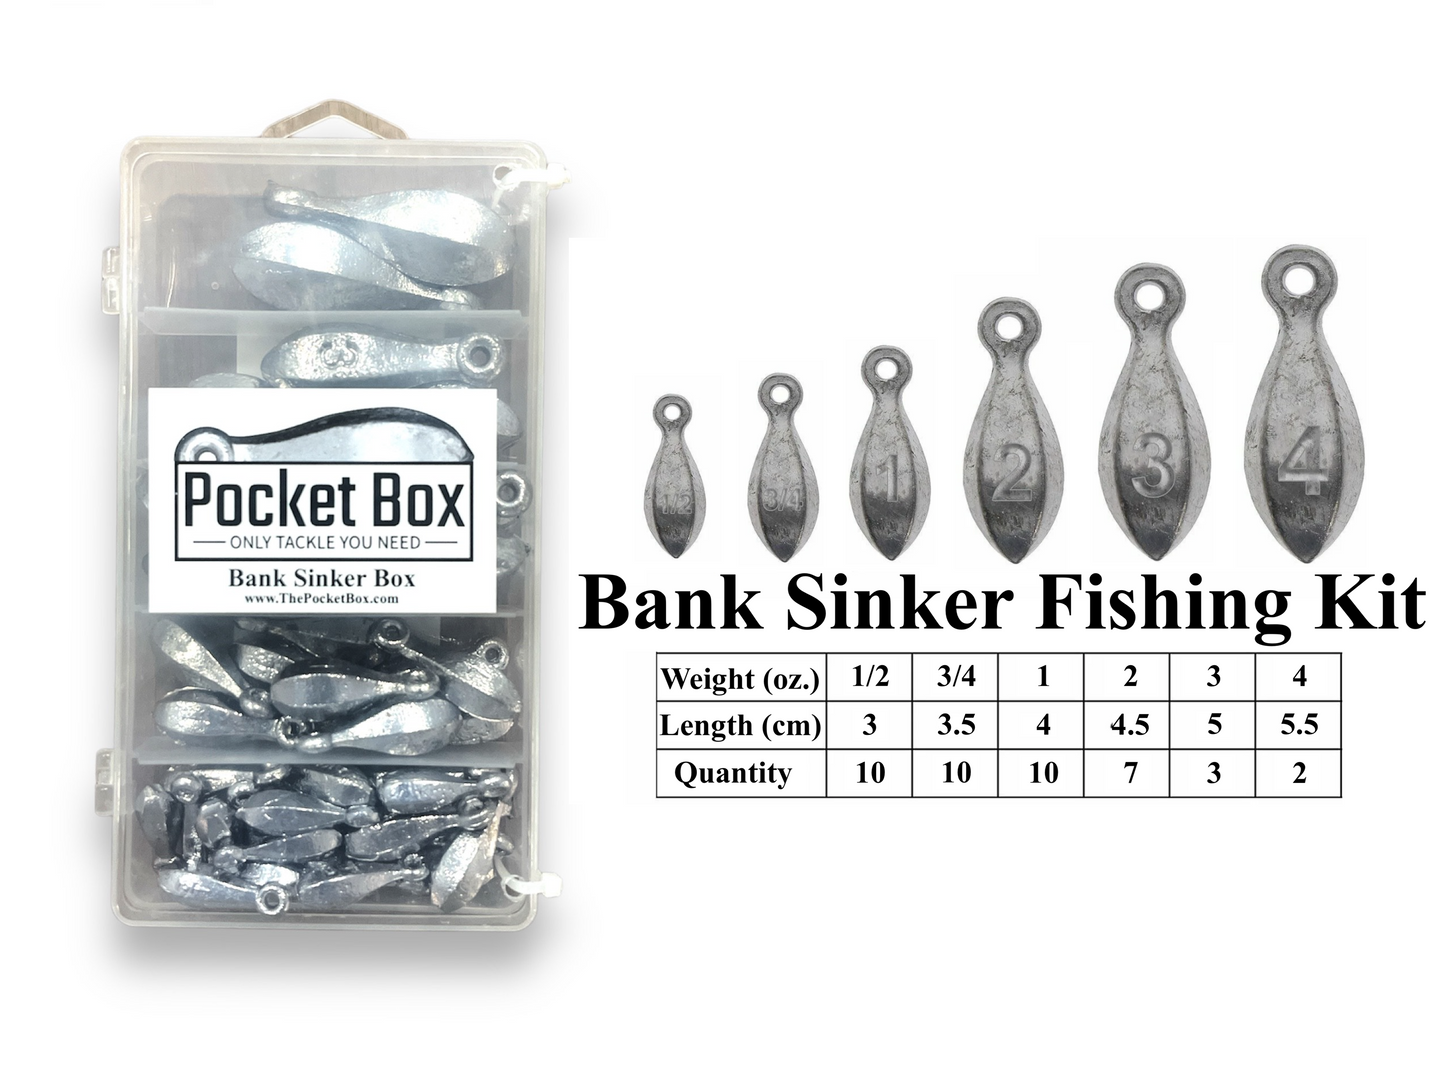 Bank Sinker Box Contents